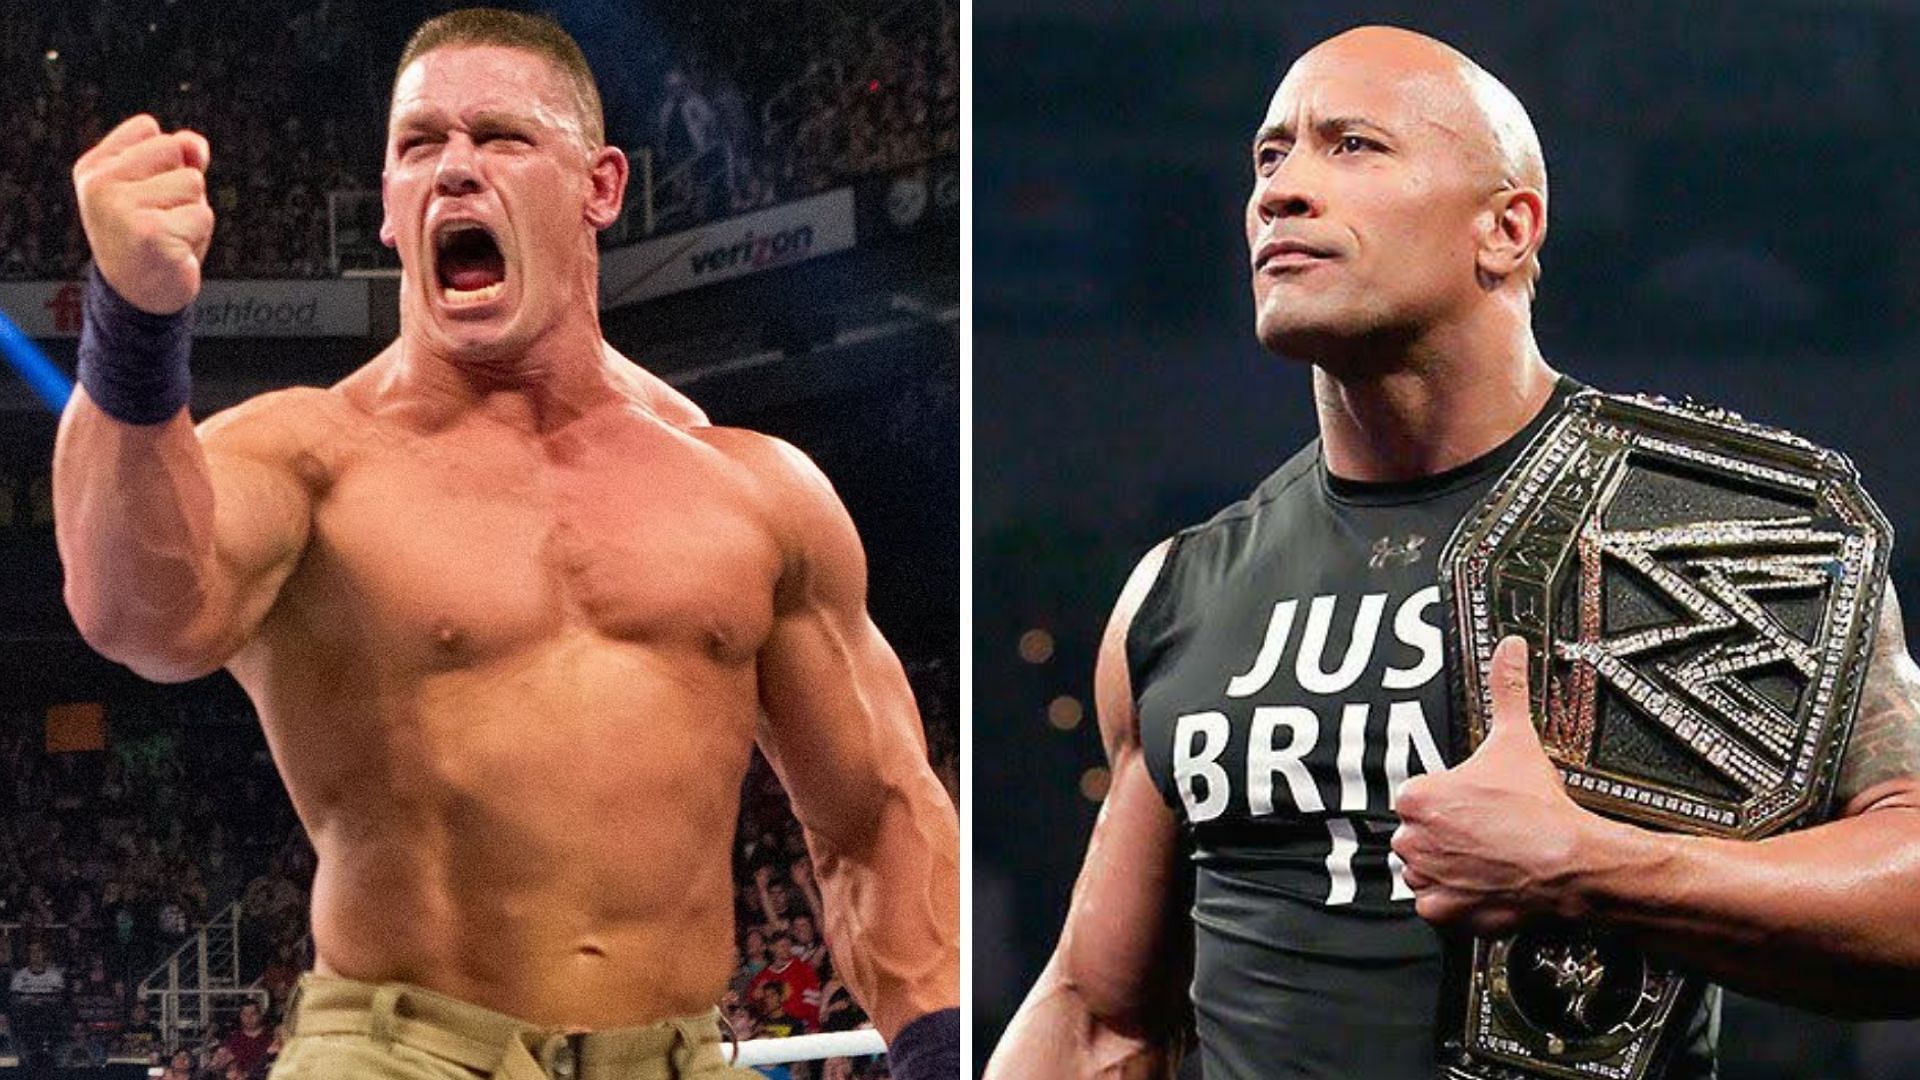 John Cena has had several legendary moments at the WWE Royal Rumble.